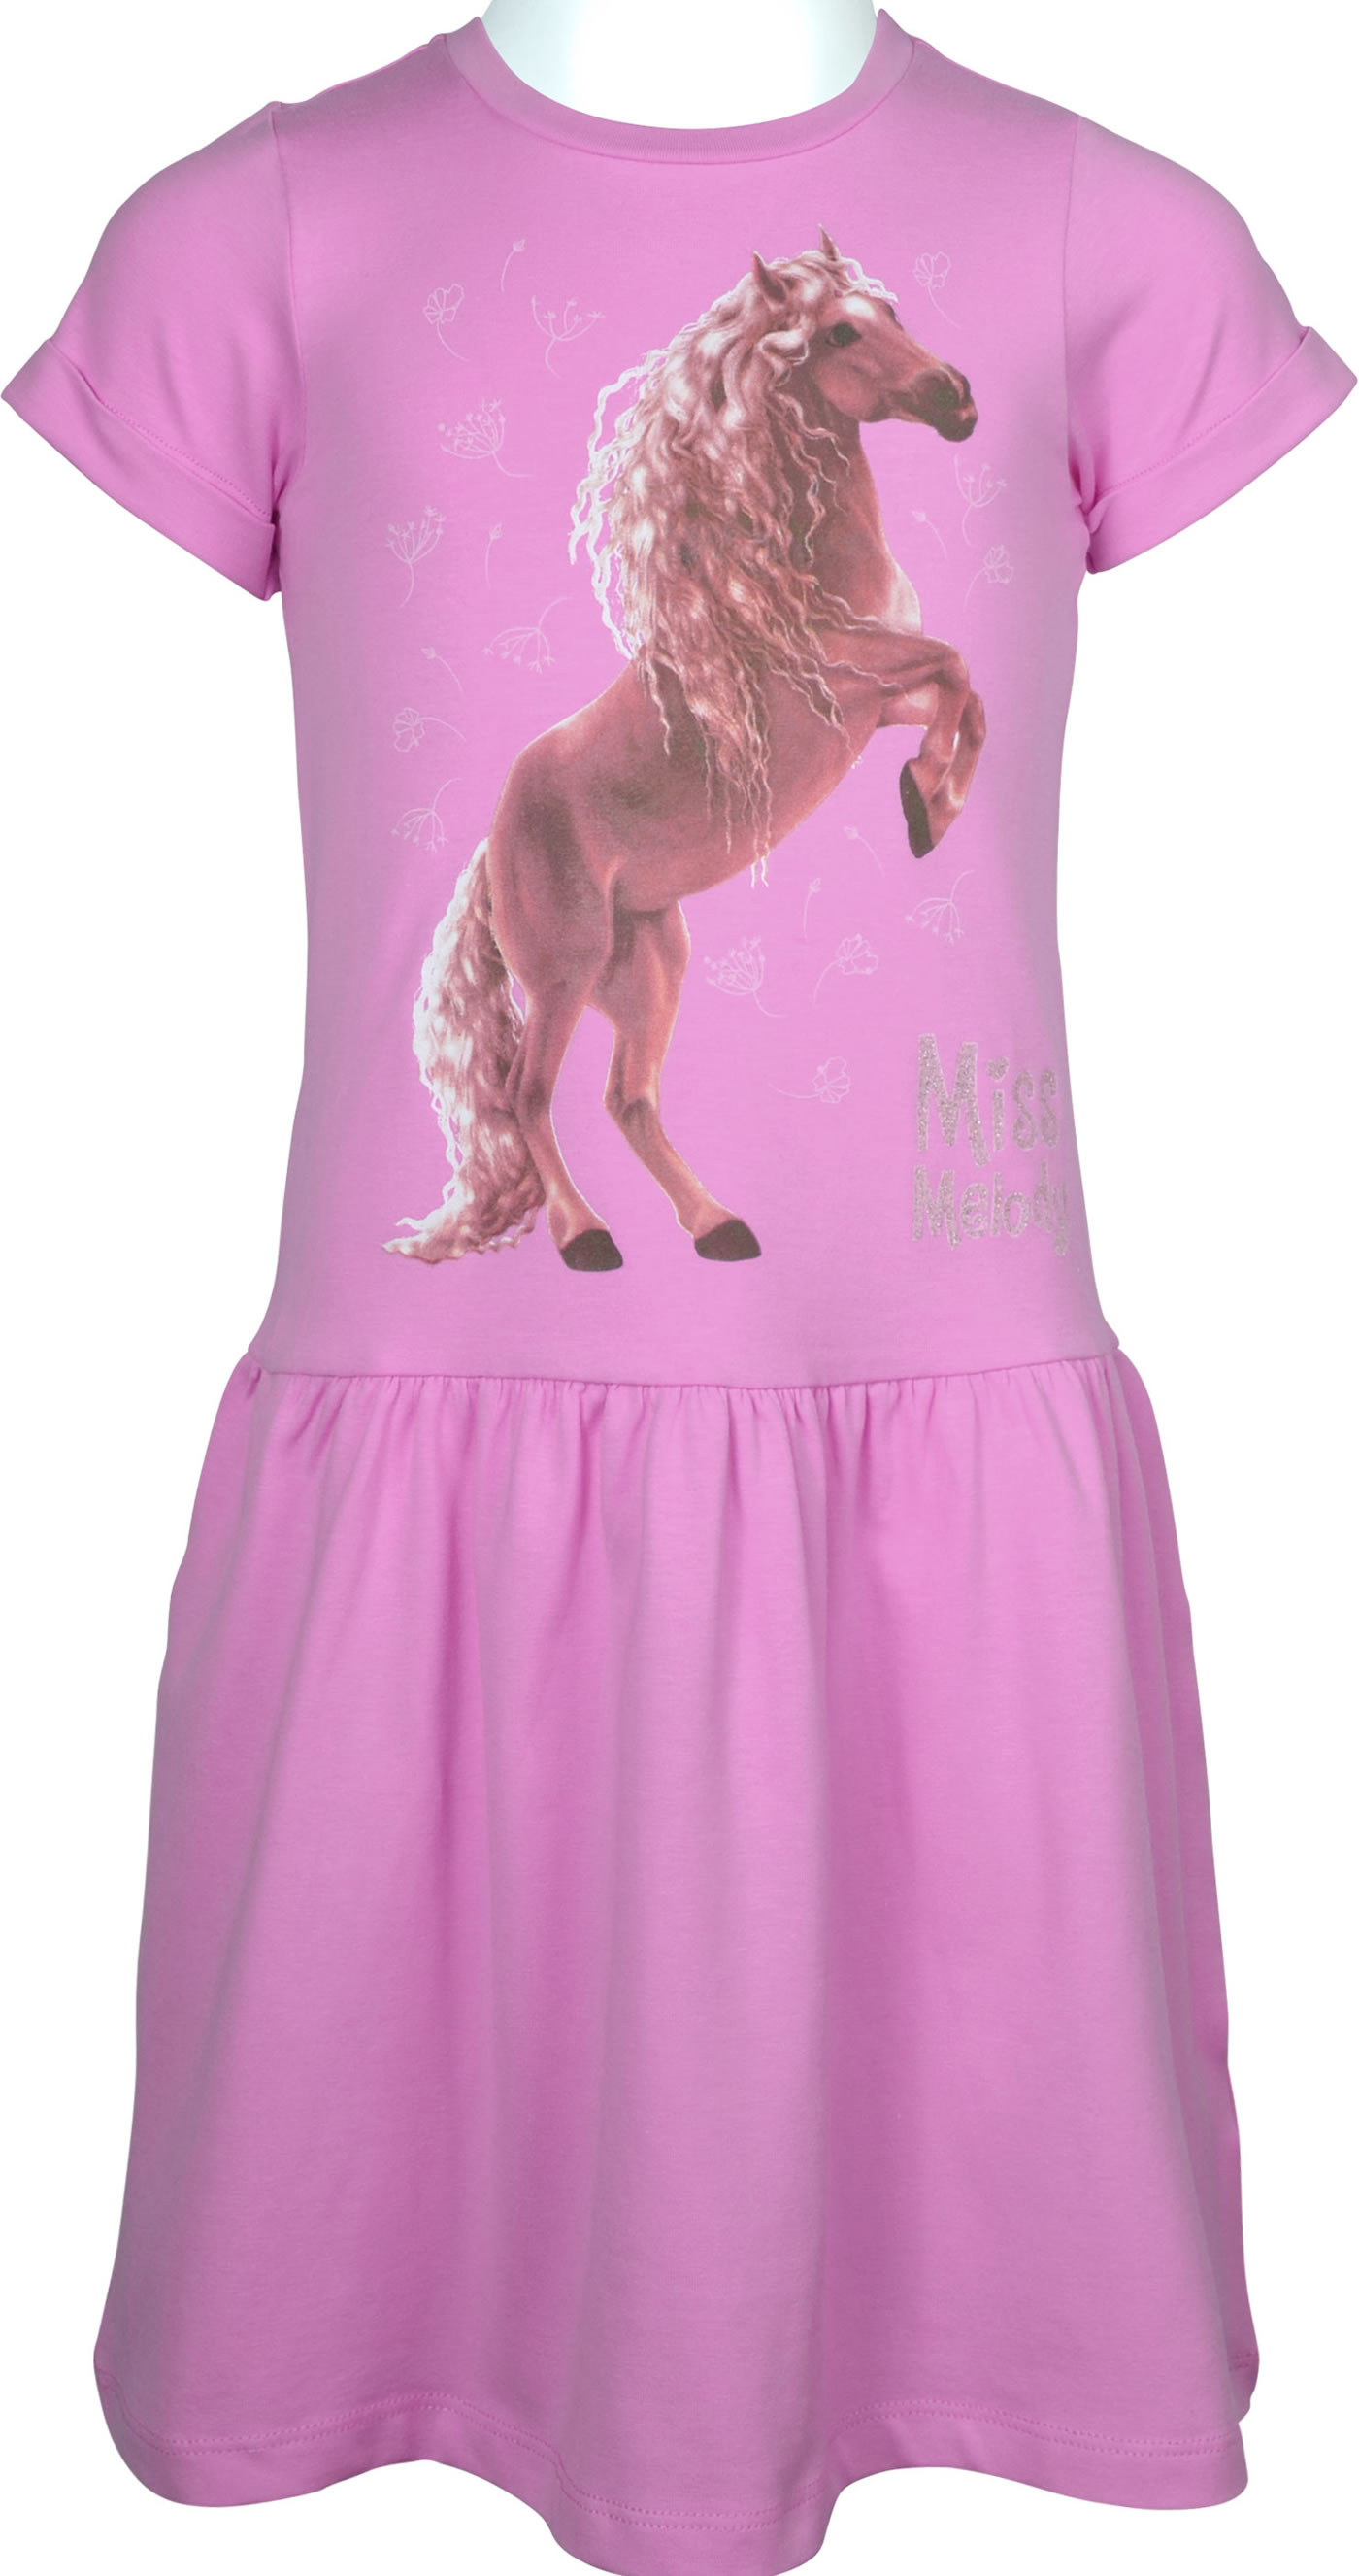 Miss Melody sachet shop Dress online short pink at sleeve